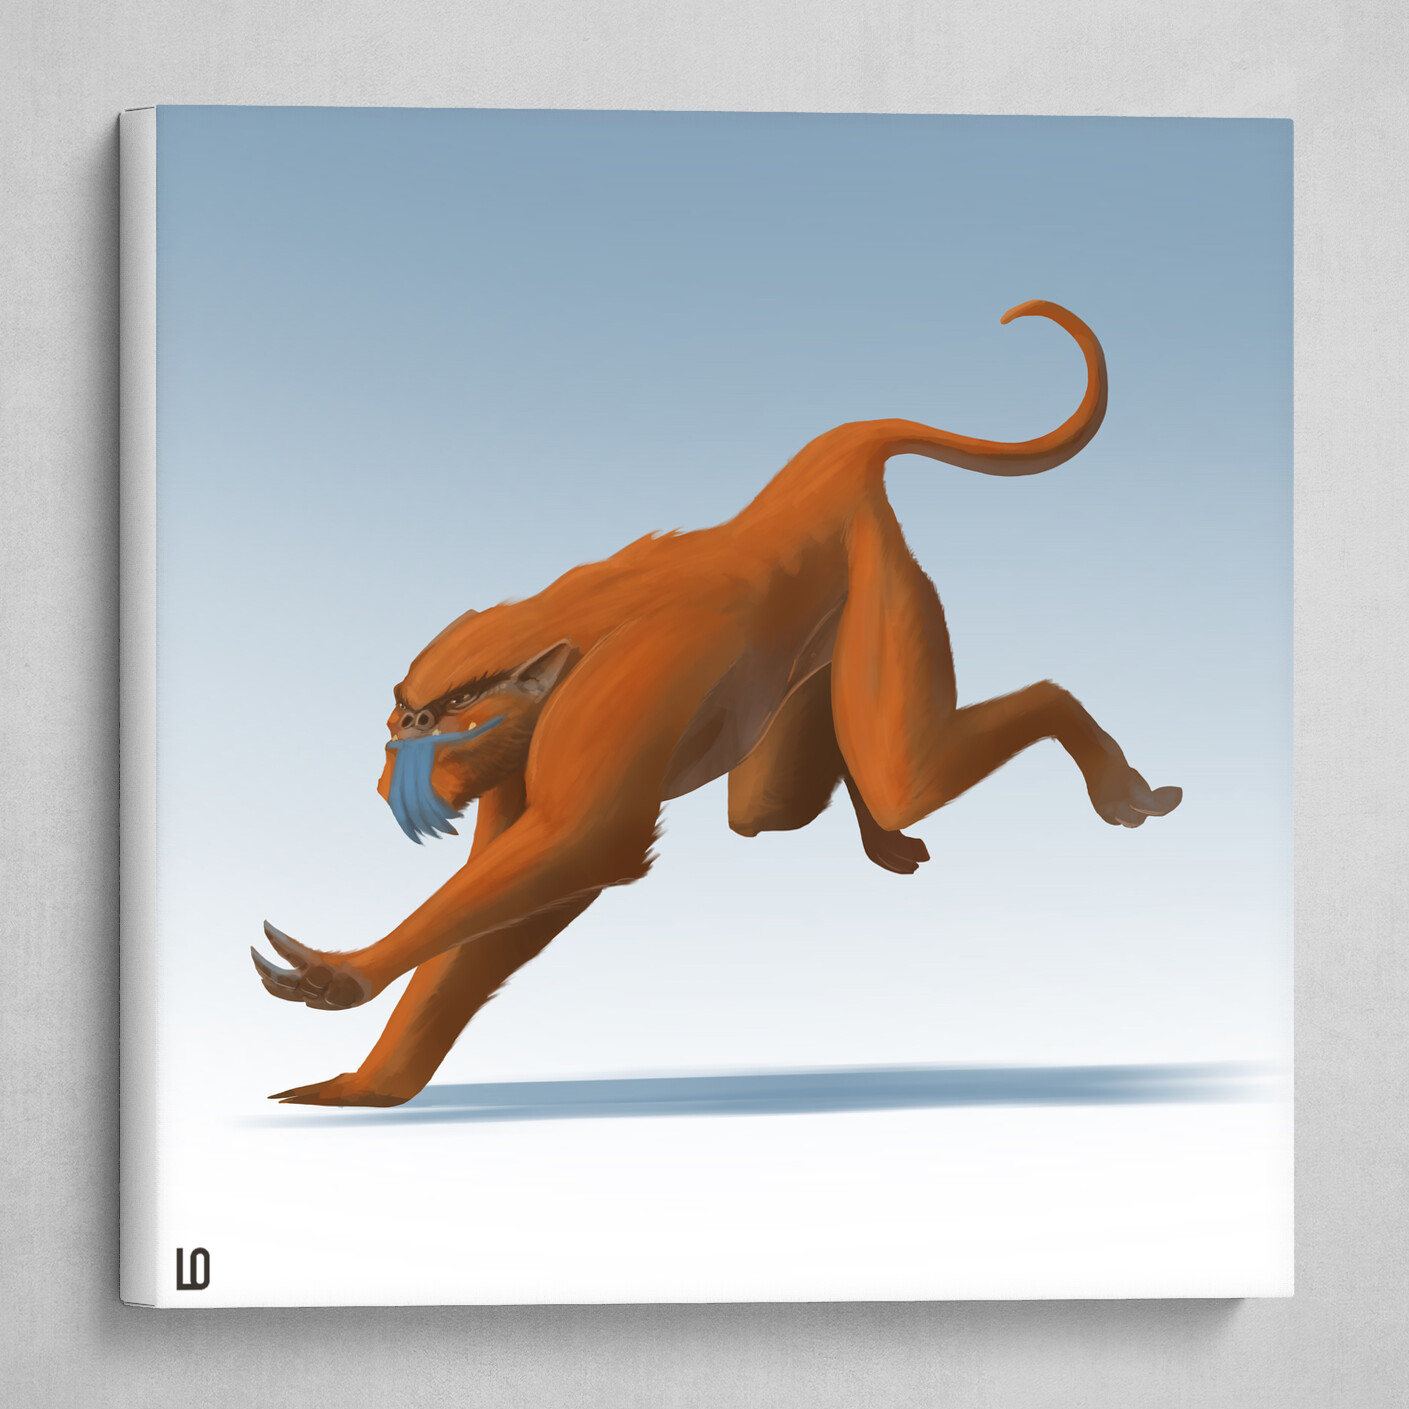 Running monkey #716